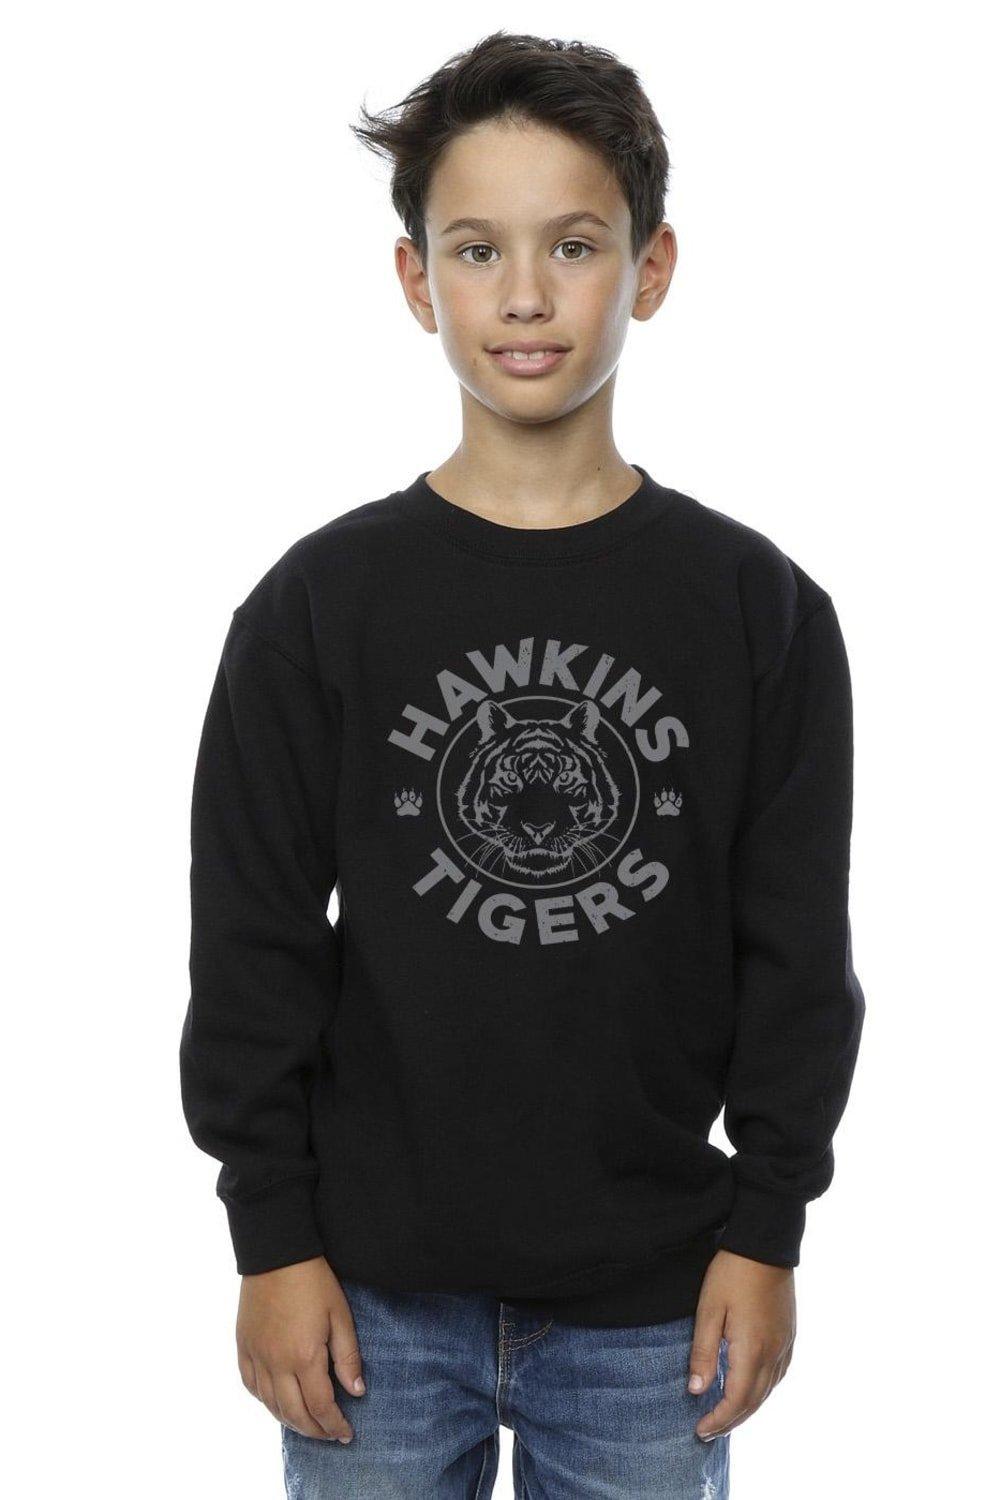 Stranger Things Hawkins Grey Tiger Sweatshirt